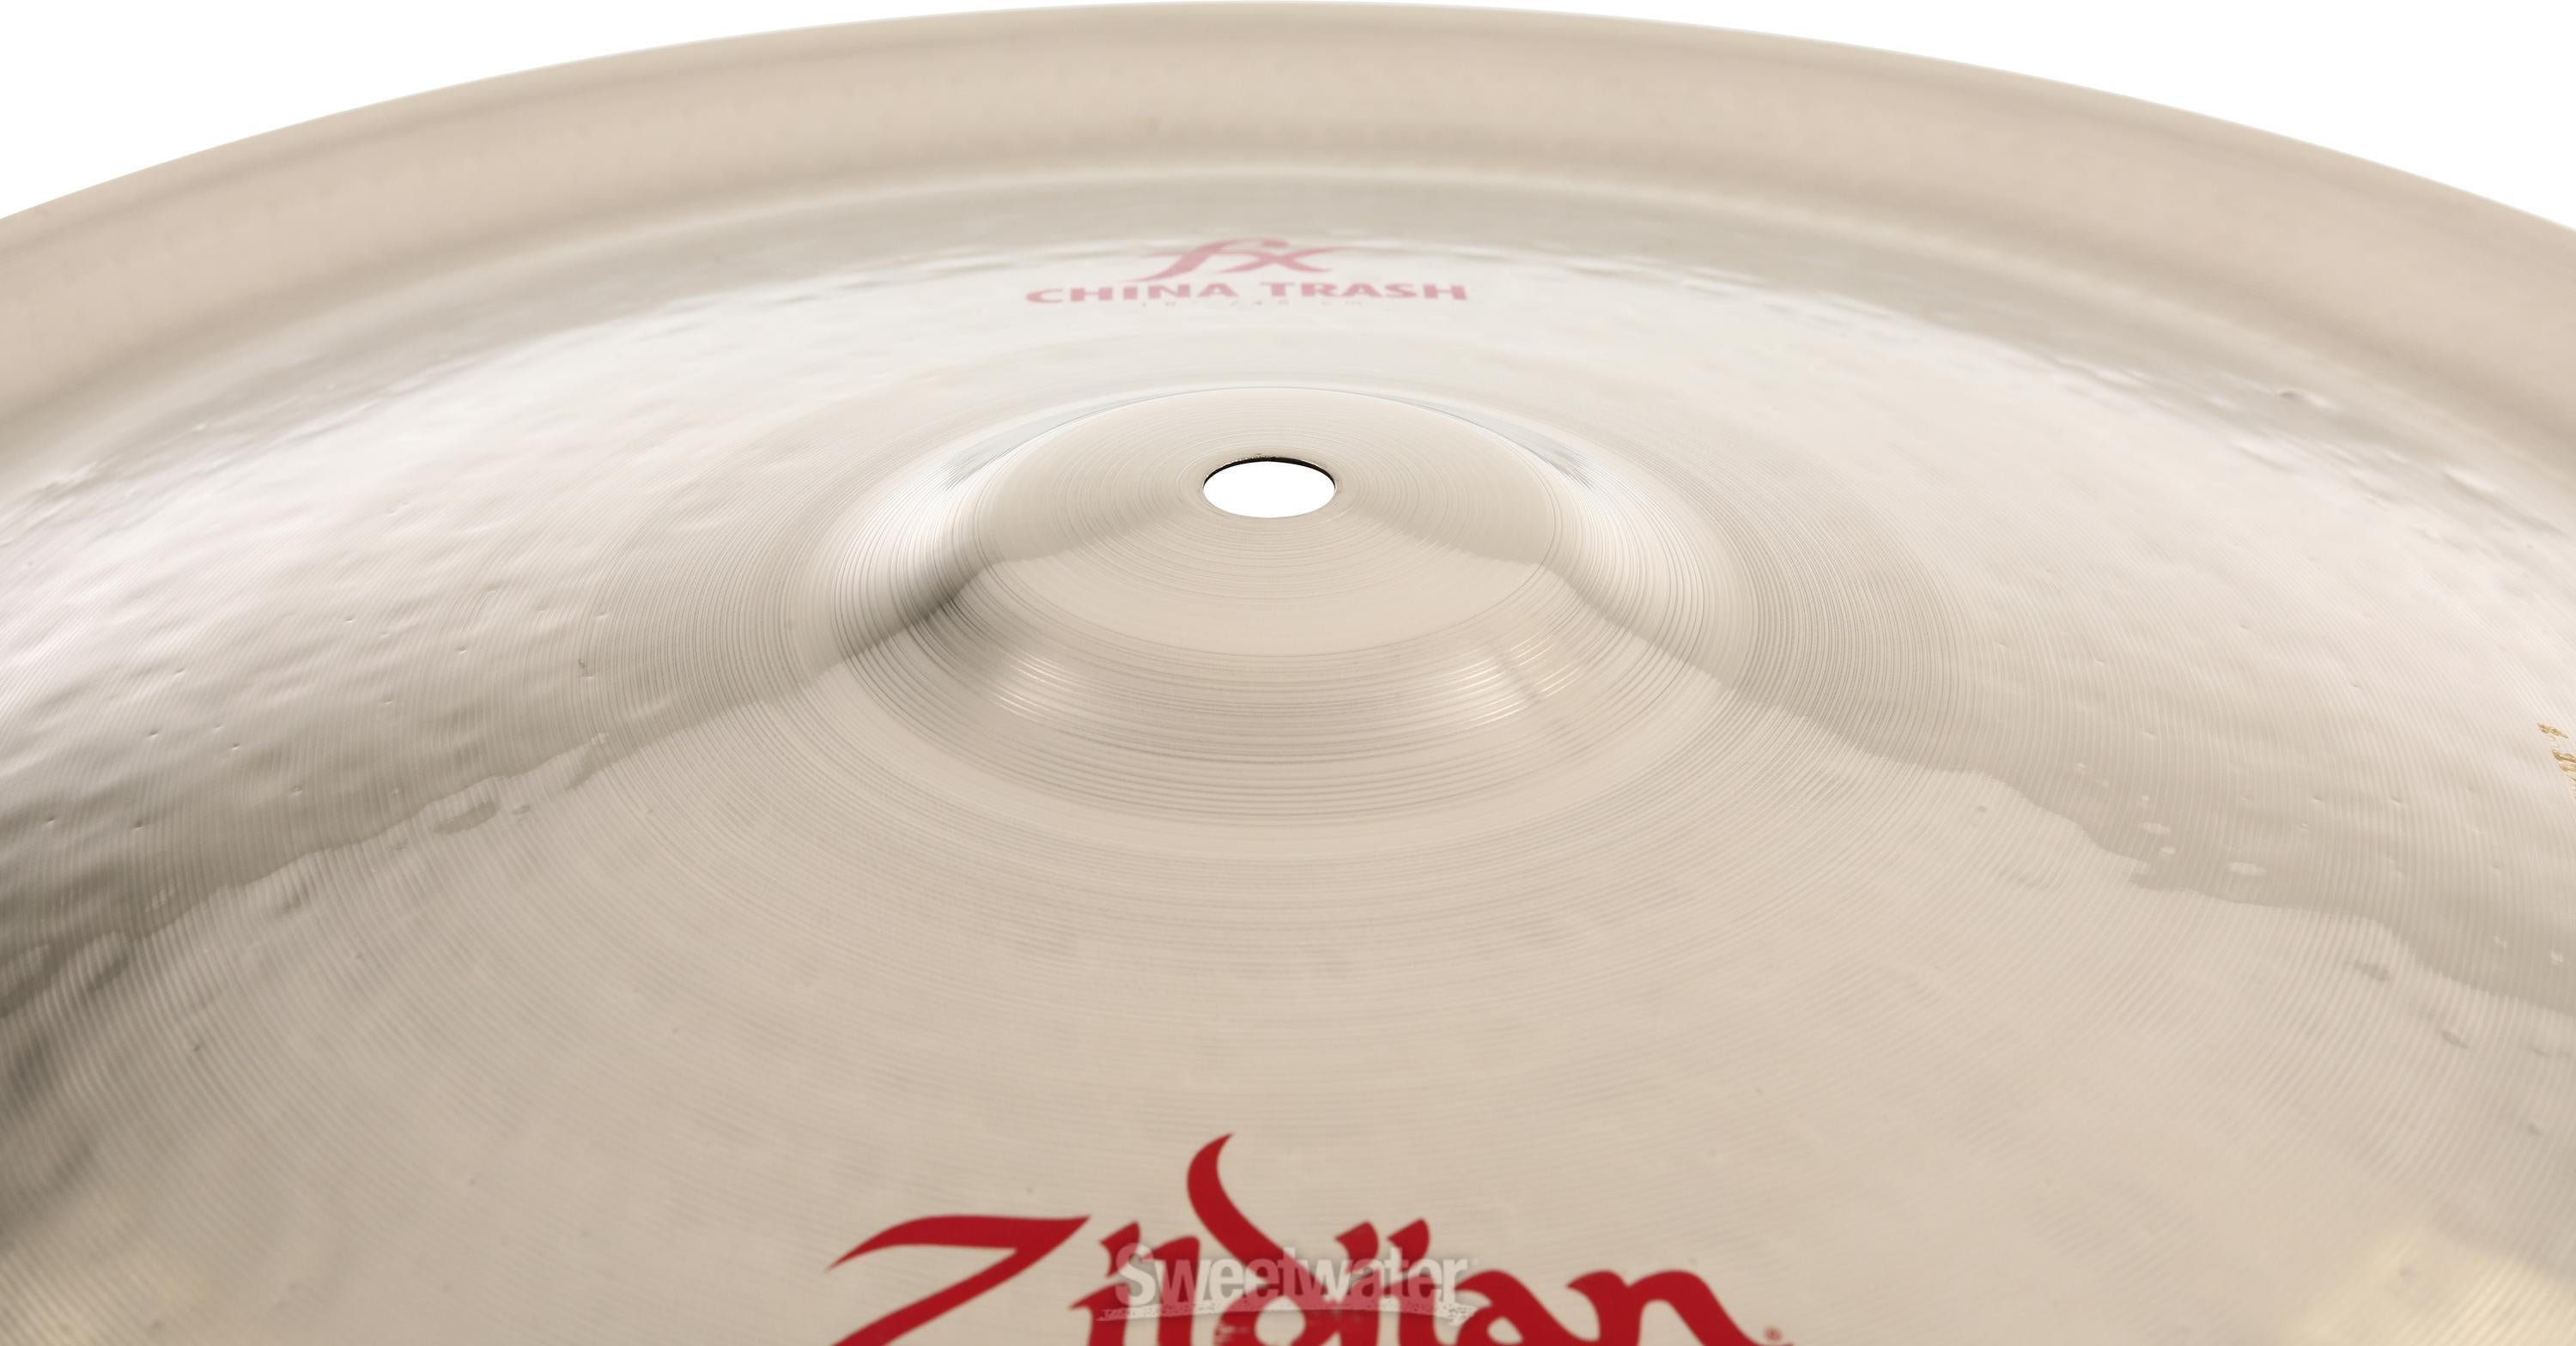 Zildjian 18 inch FX Oriental China Trash Cymbal | Sweetwater